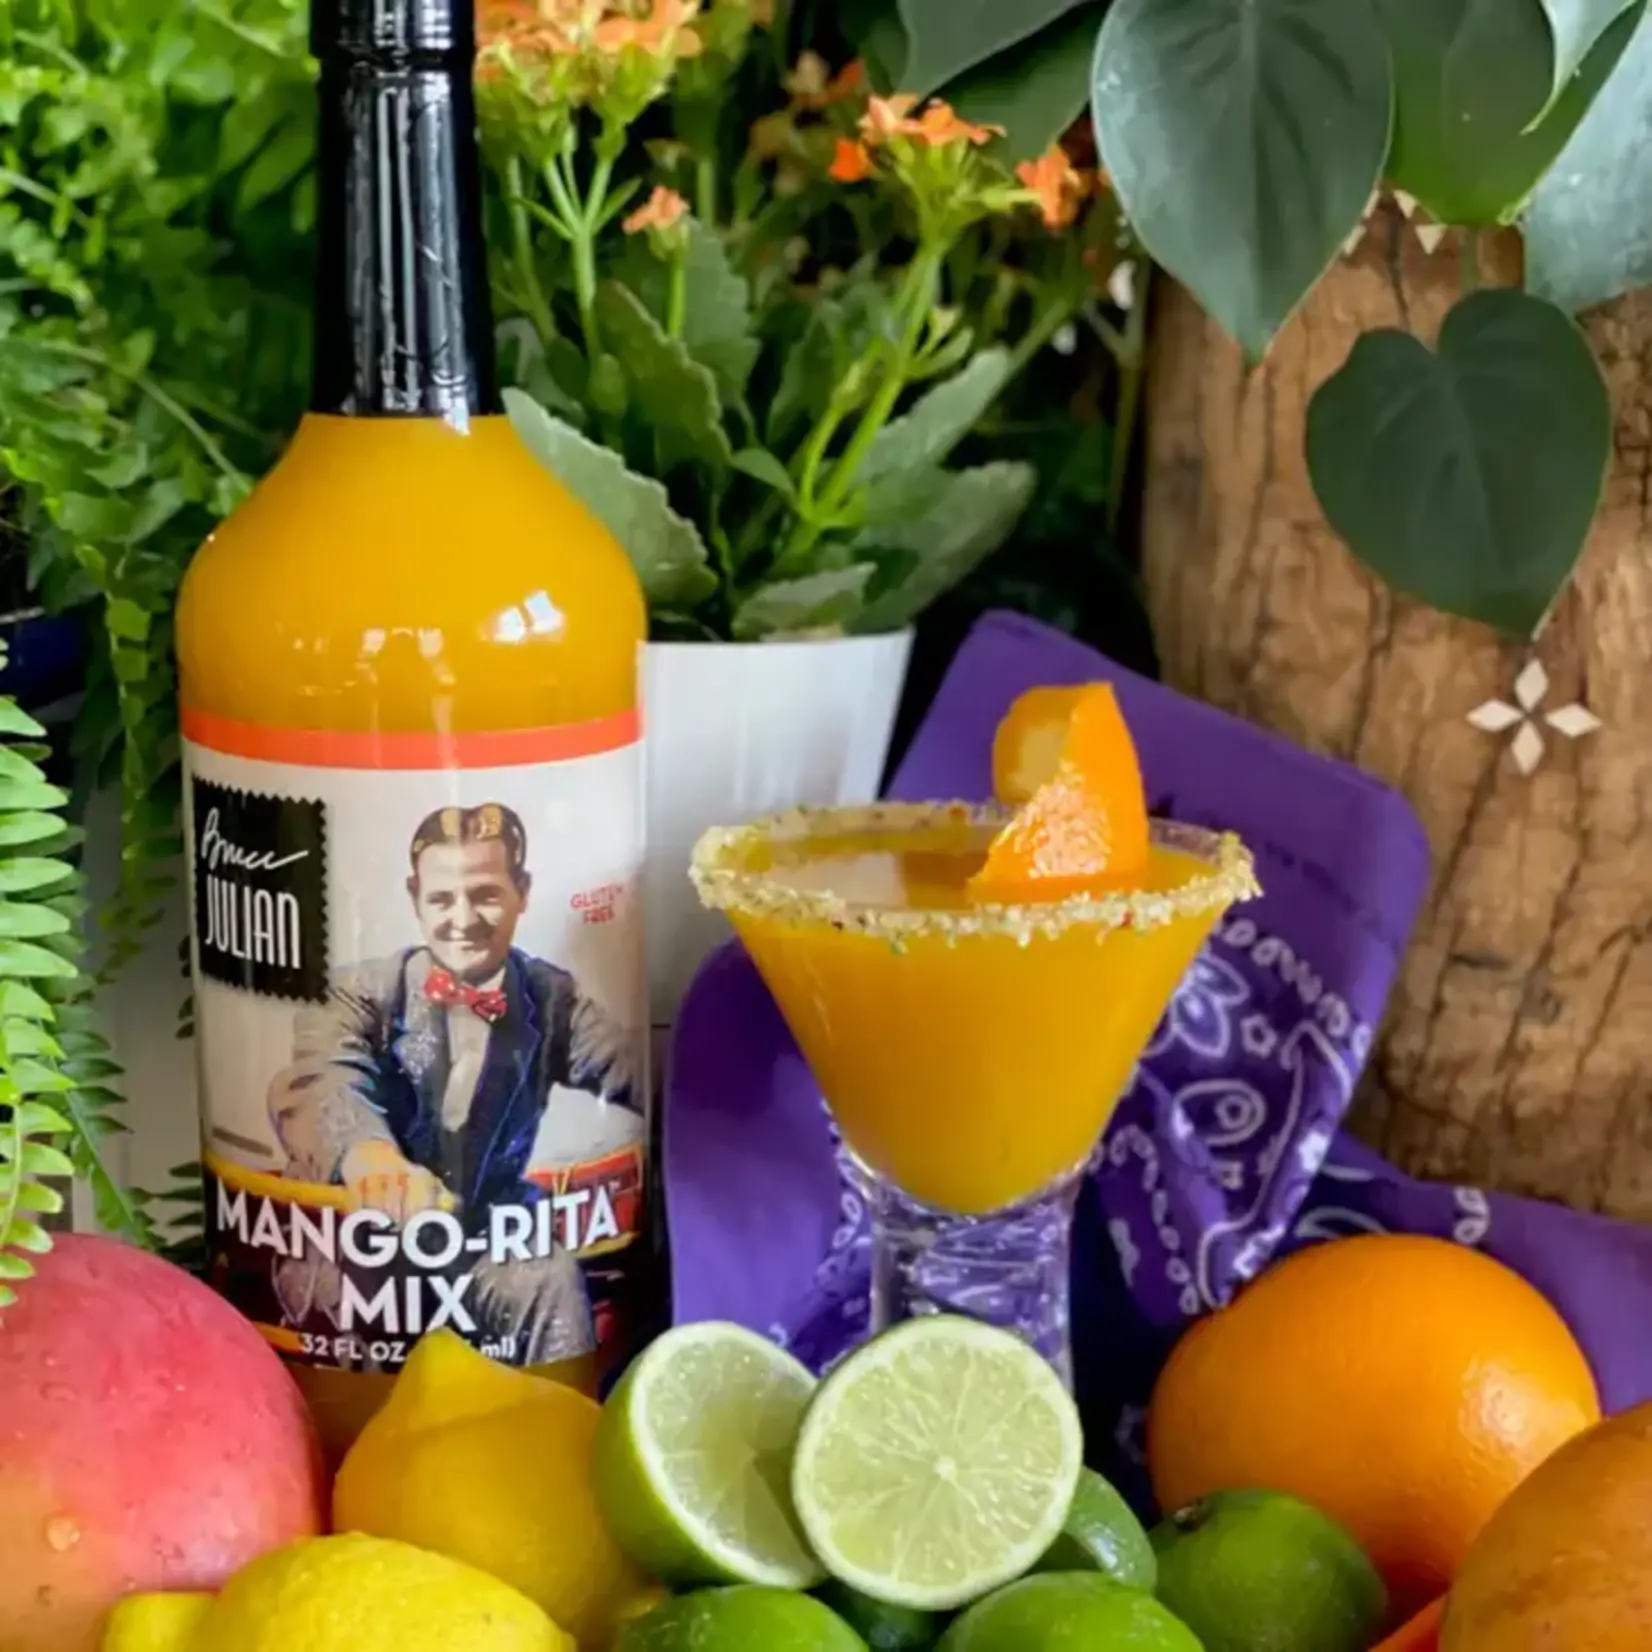 Mango-Rita Mix